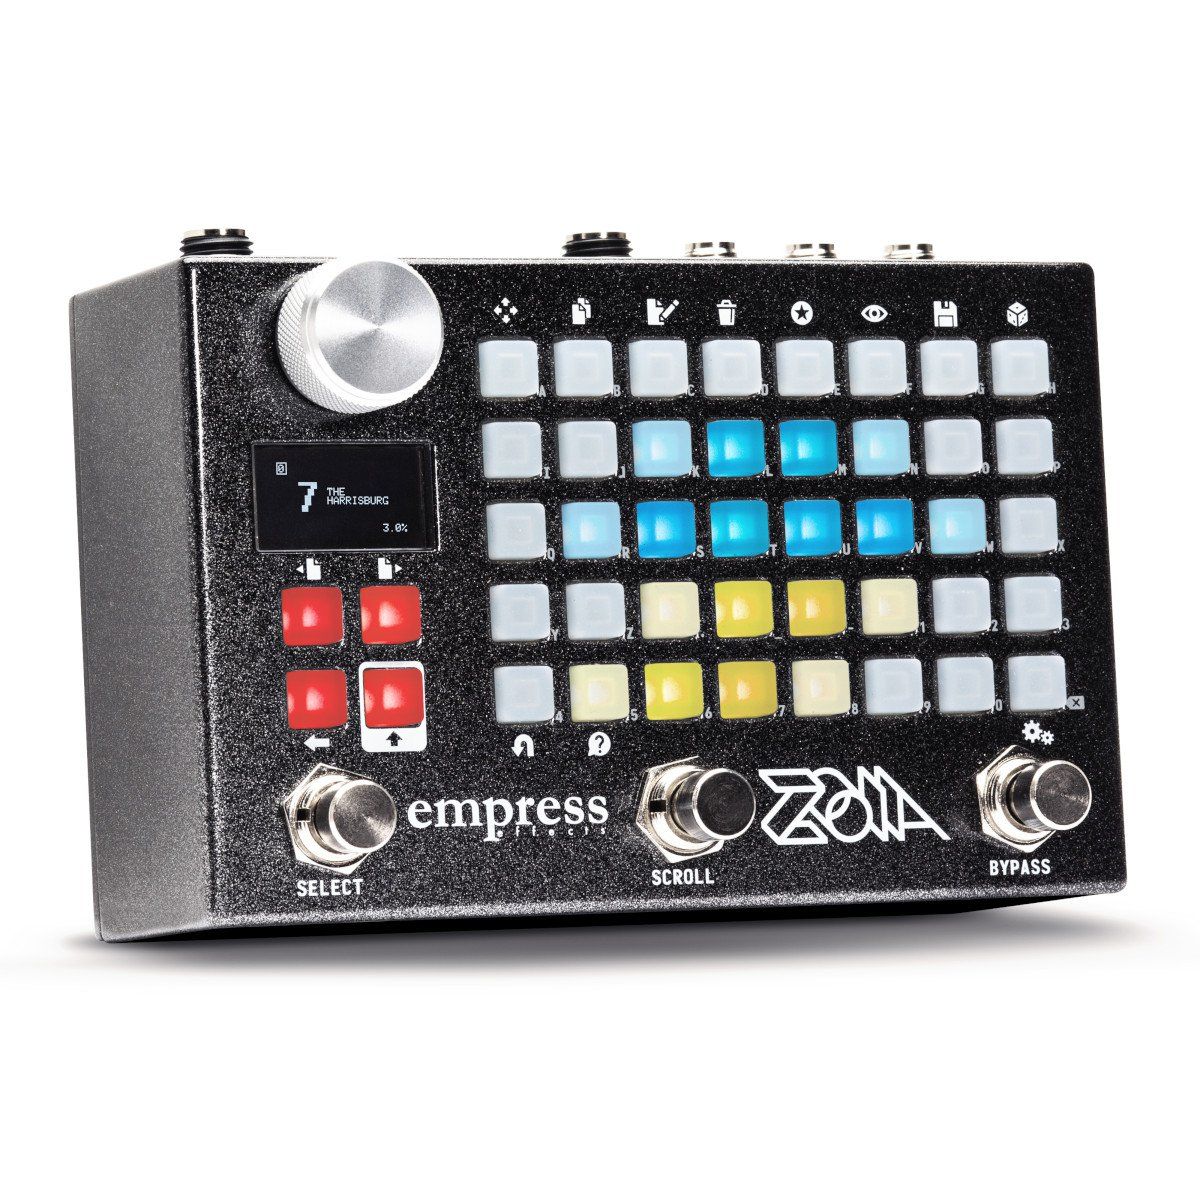 Empress Effects Zoia Modular Synthesizer Pedal